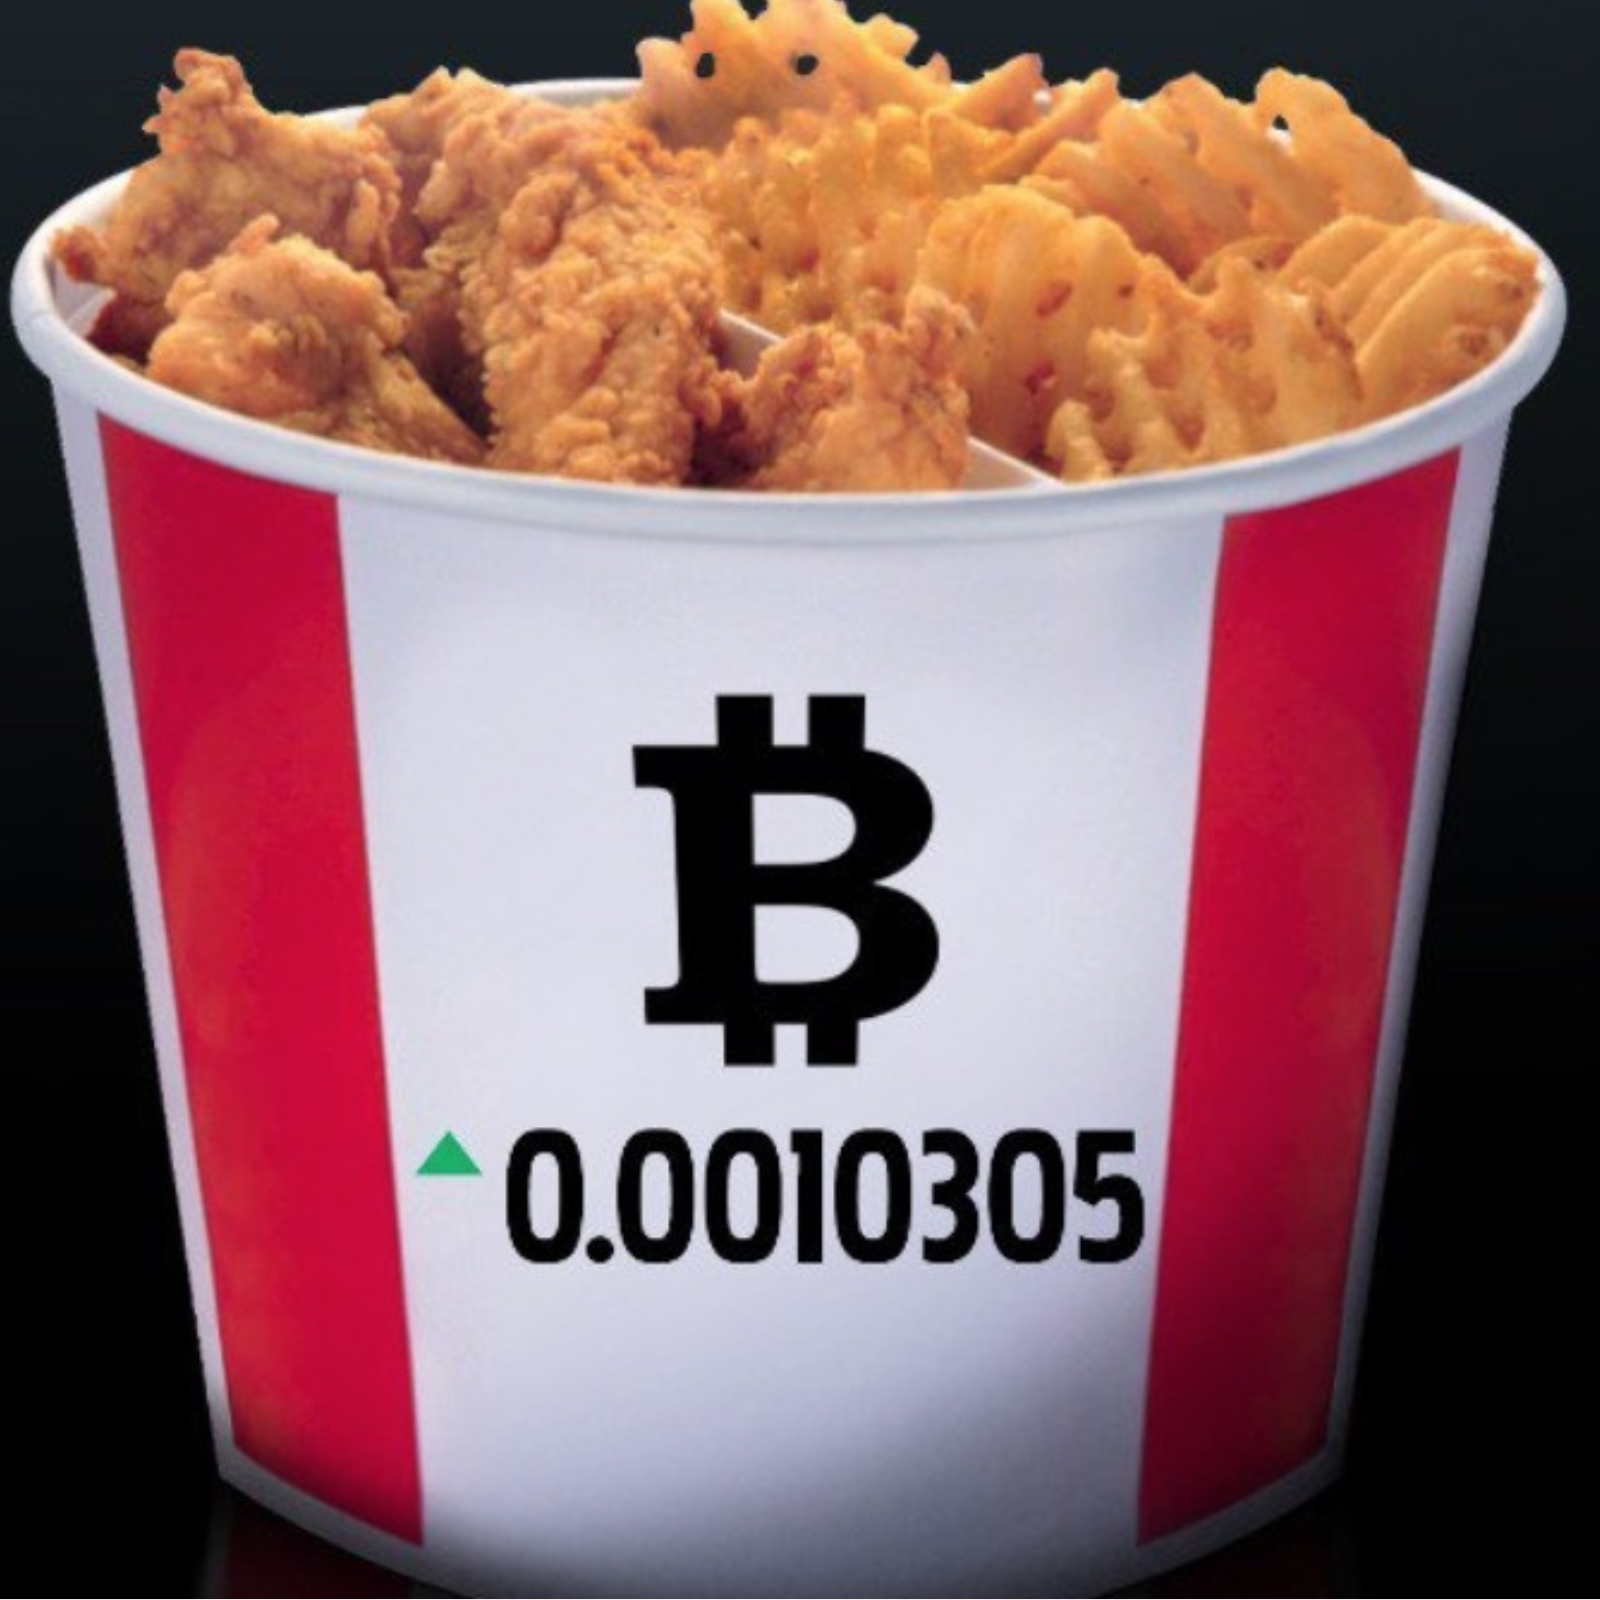 Kentucky Fried Chicken Canada Launches “Bitcoin Bucket”